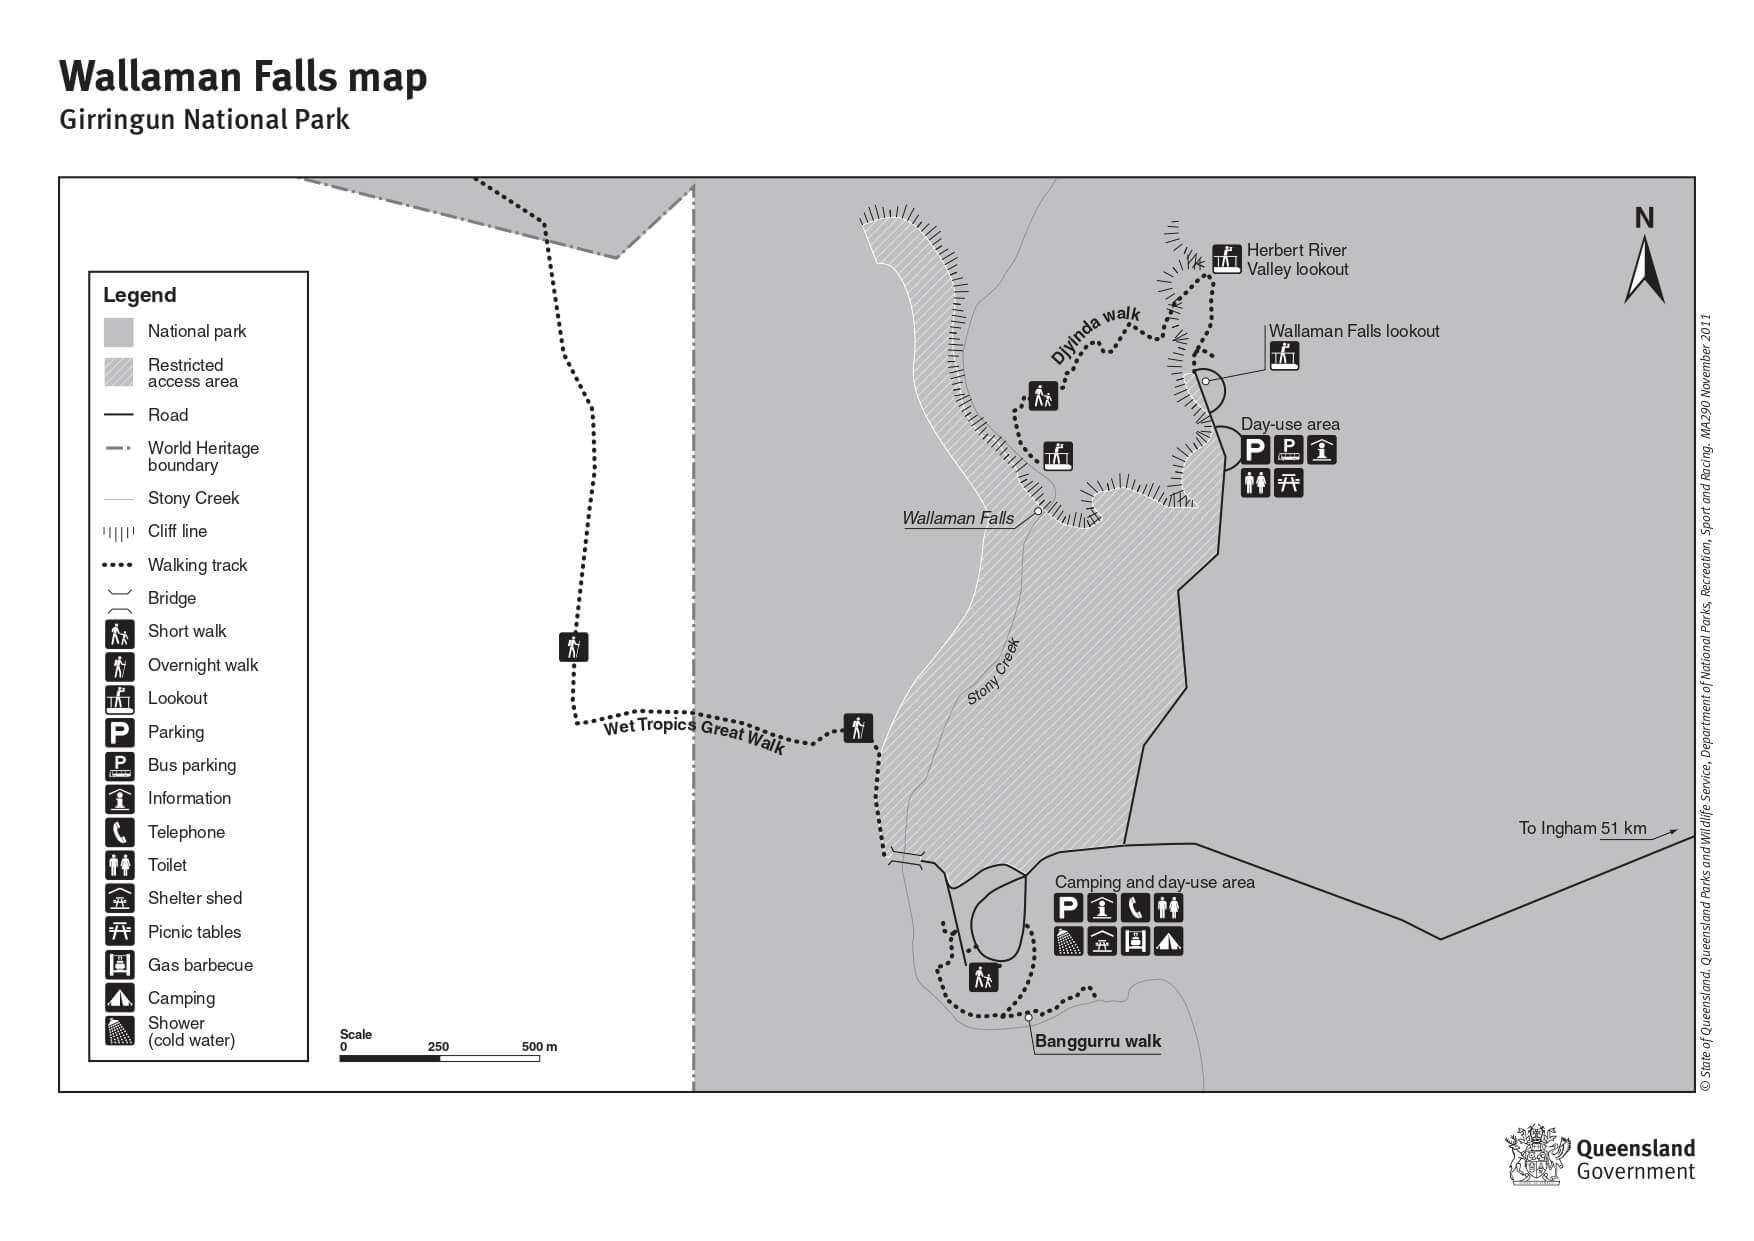 Wallaman Falls walking track map, Girringun National Park, QLD.